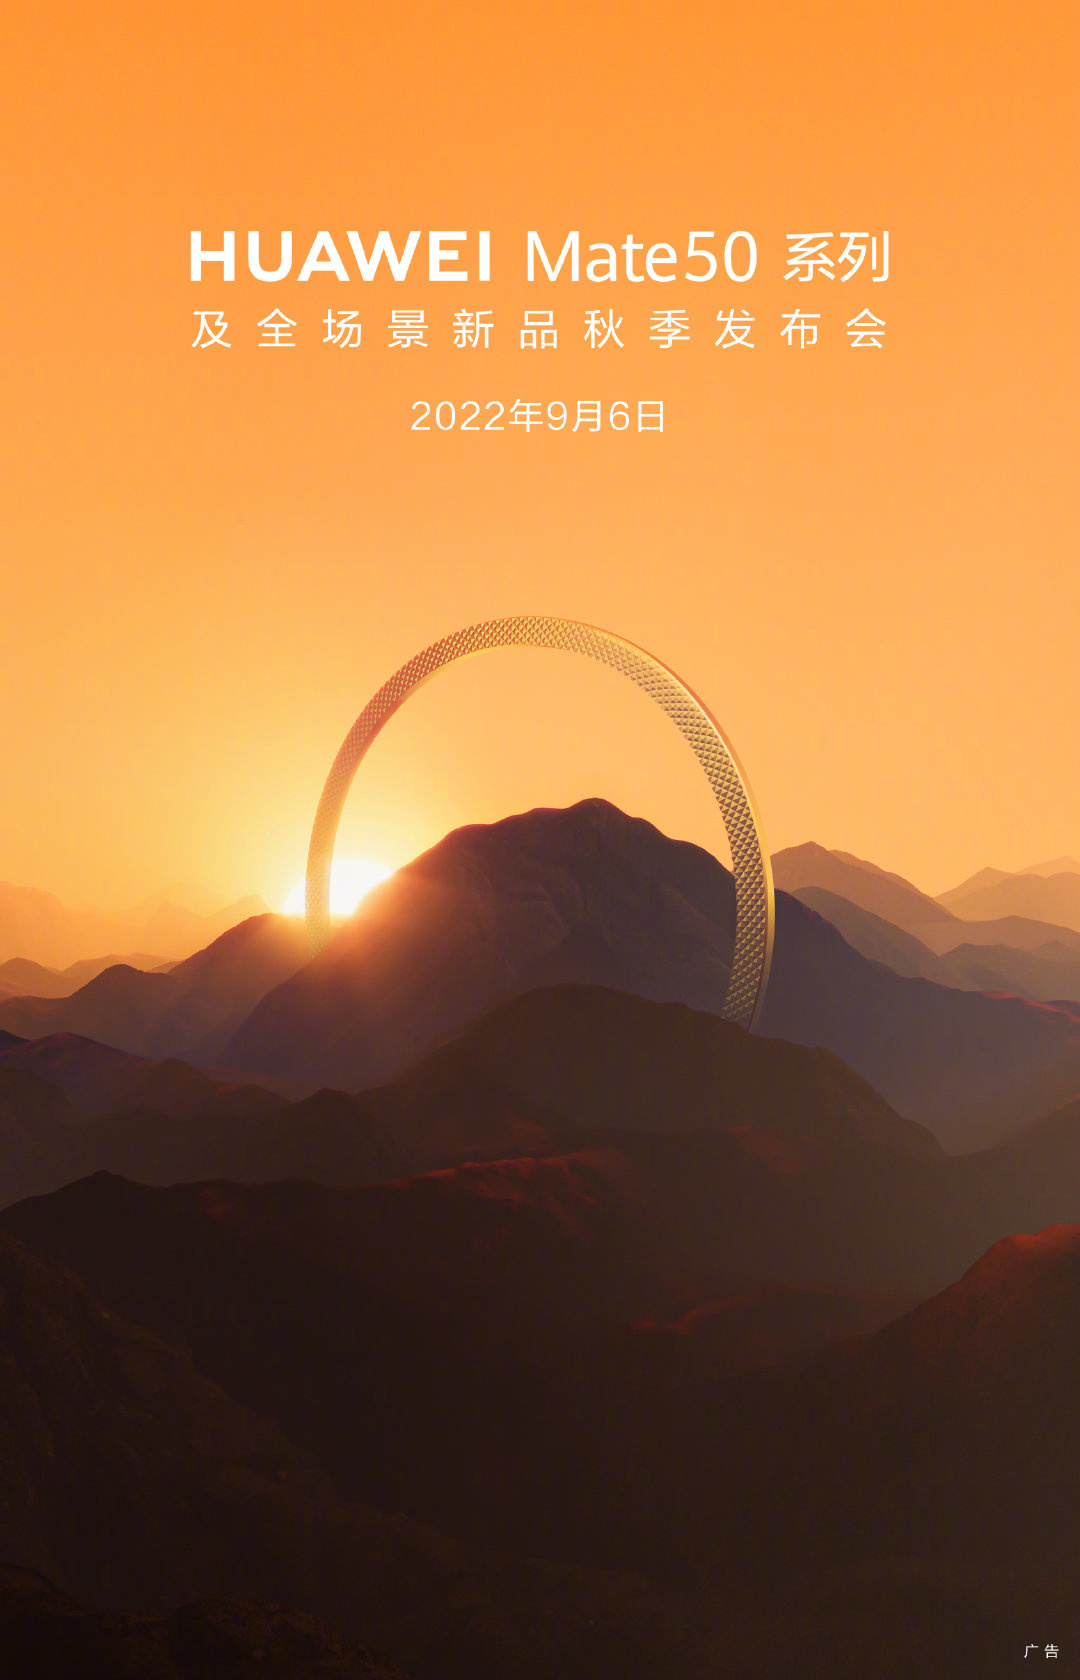 Huawei Mate 50 Series Launch Date in China